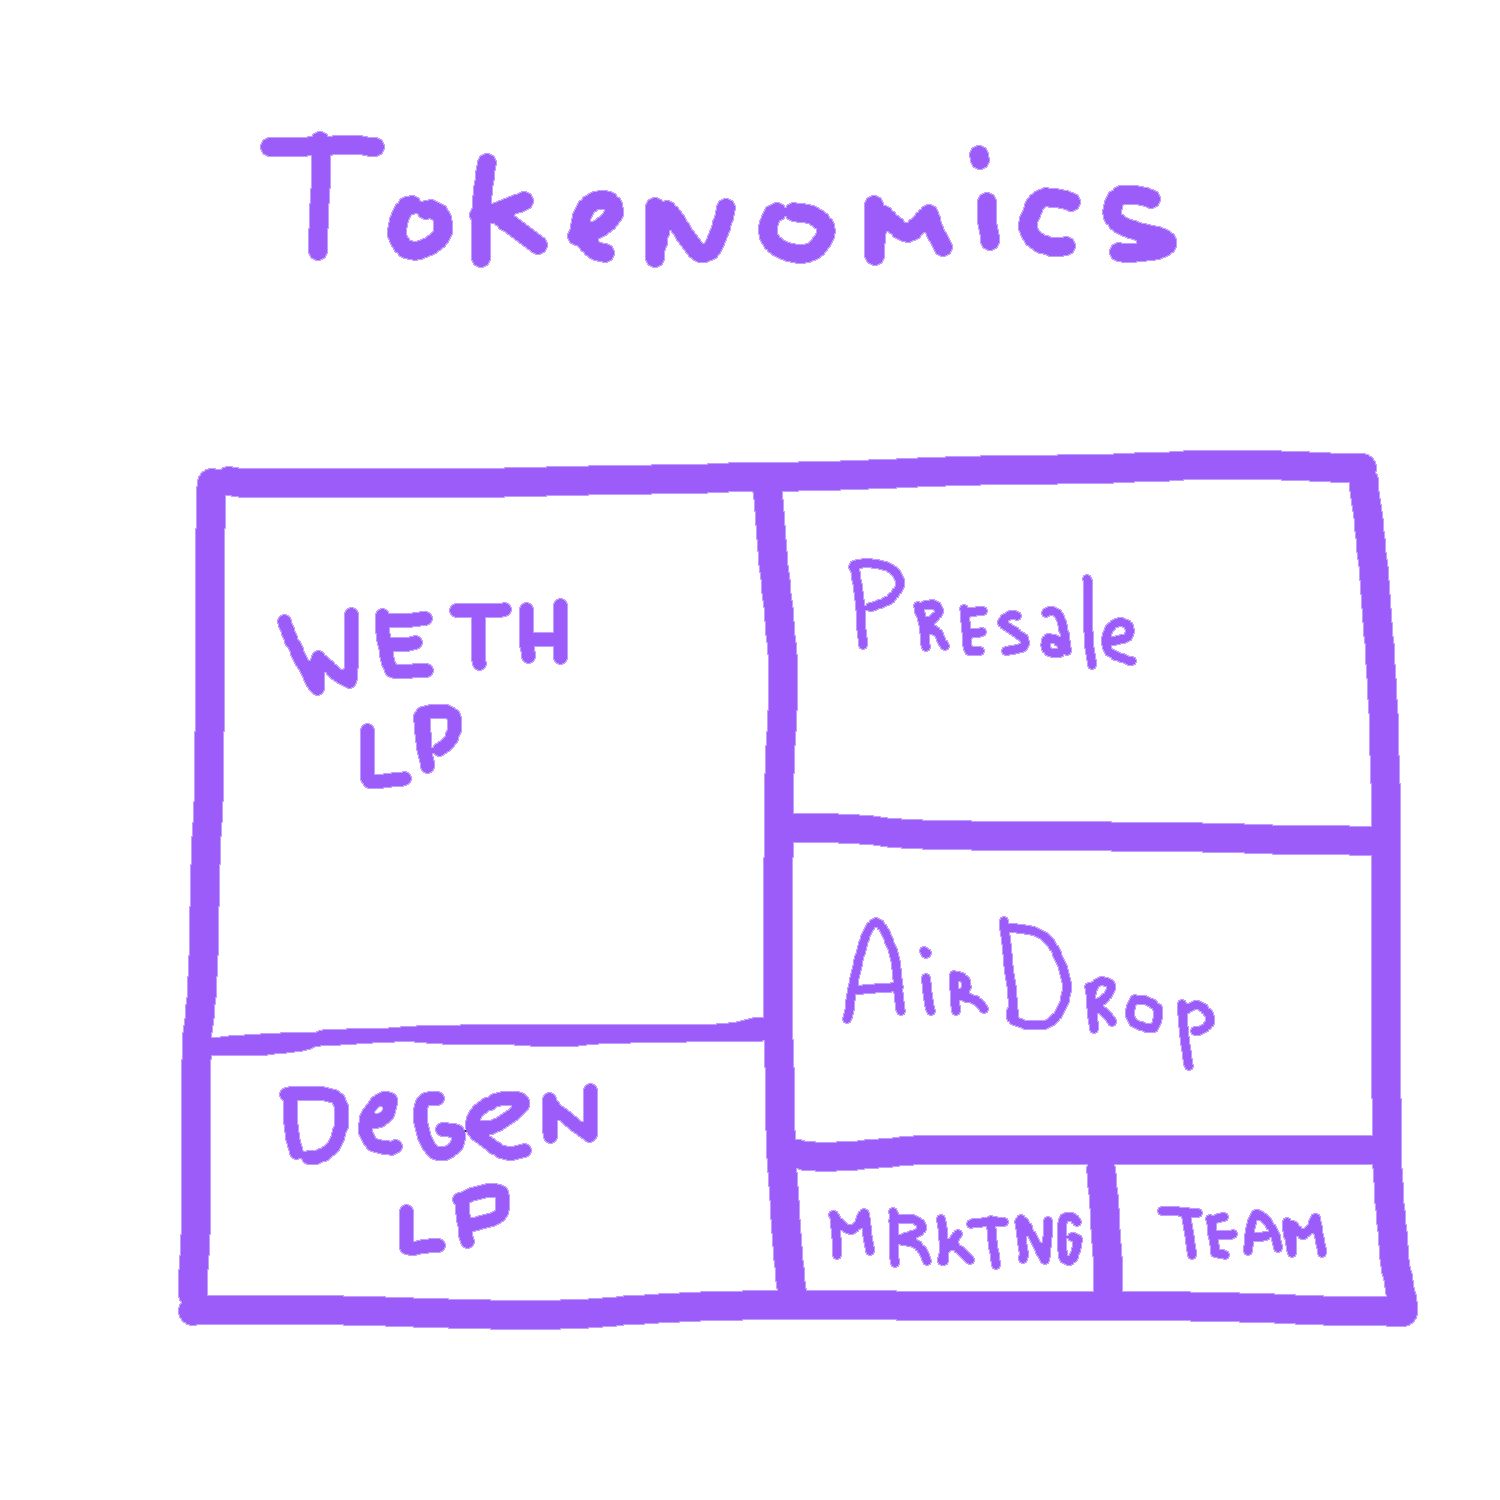 tokenomics